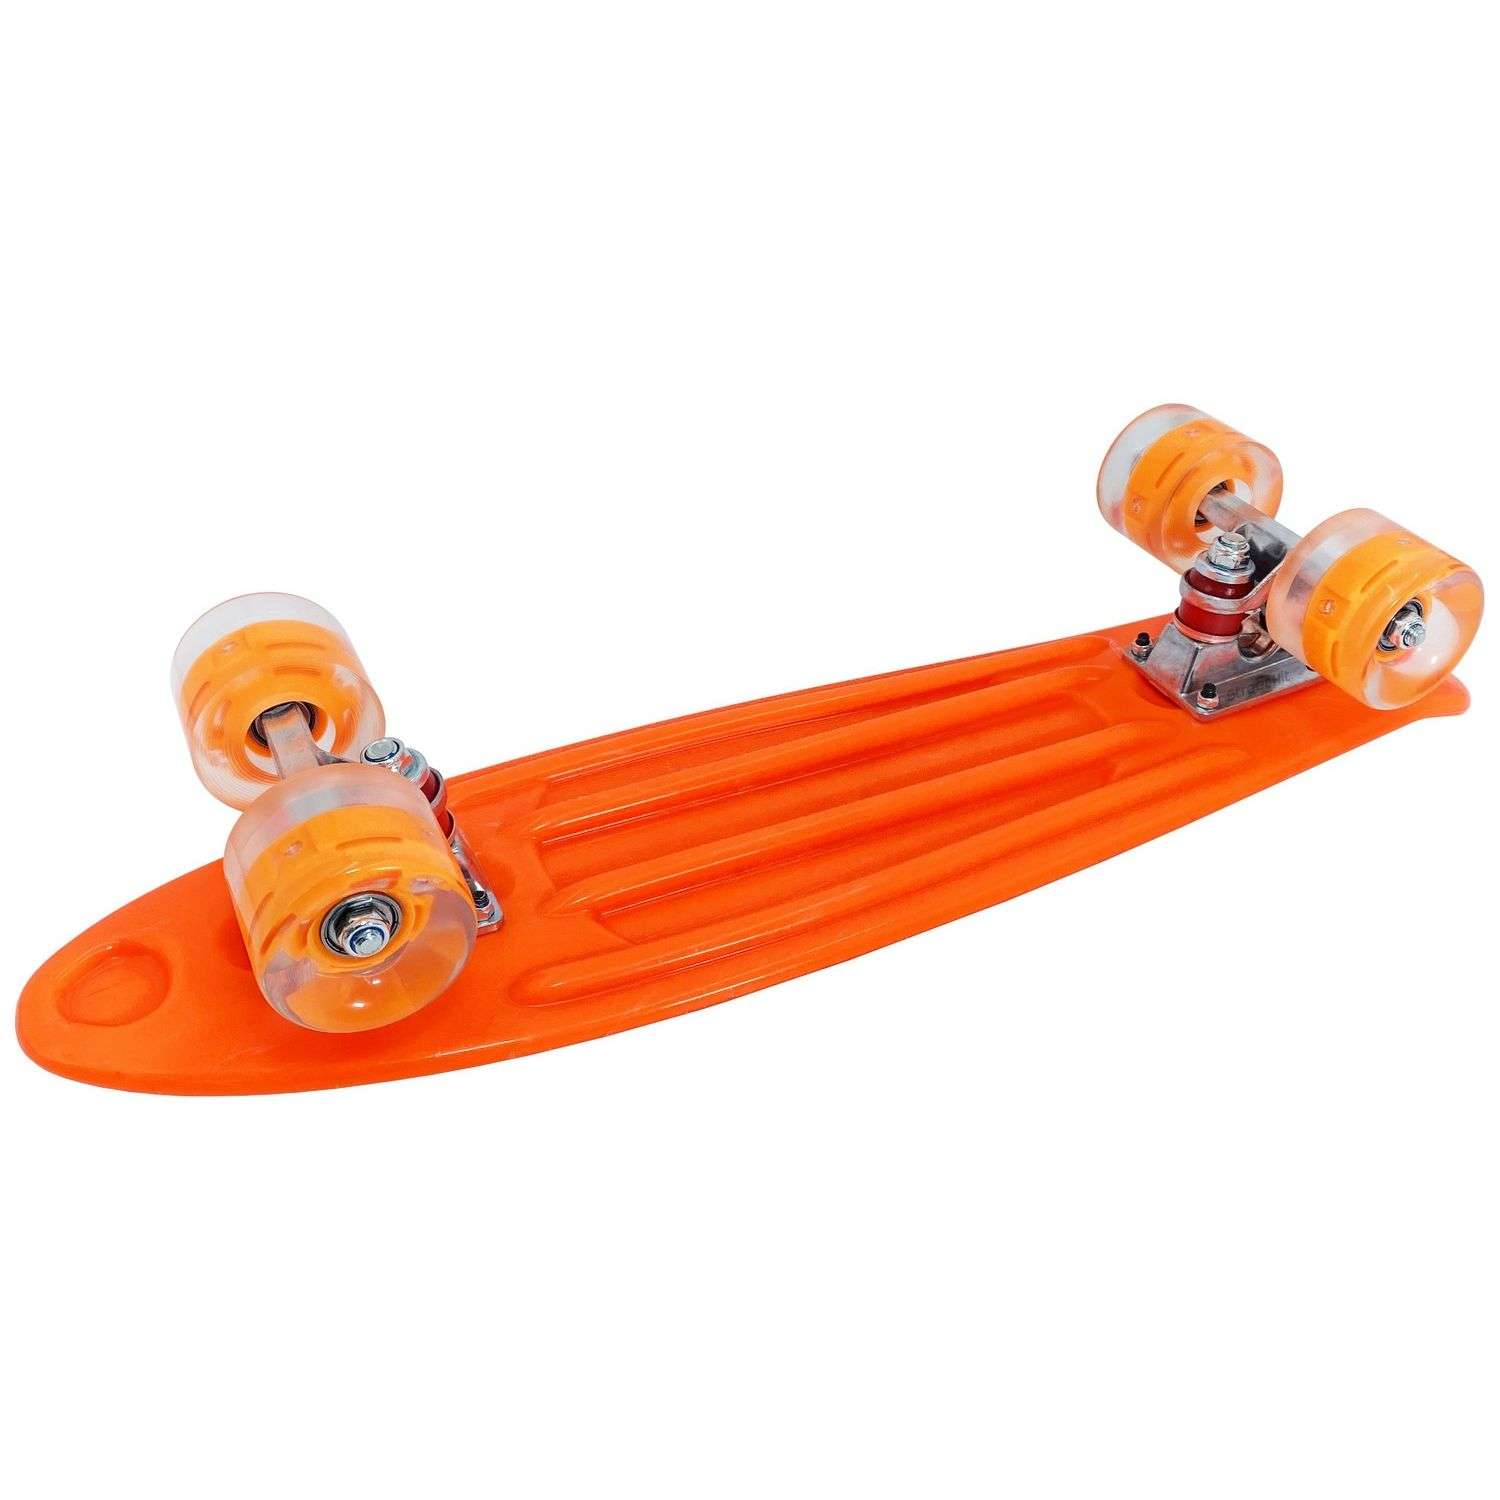 Скейтборд Street Hit Оранжевый со светящимися колесами - фото 2